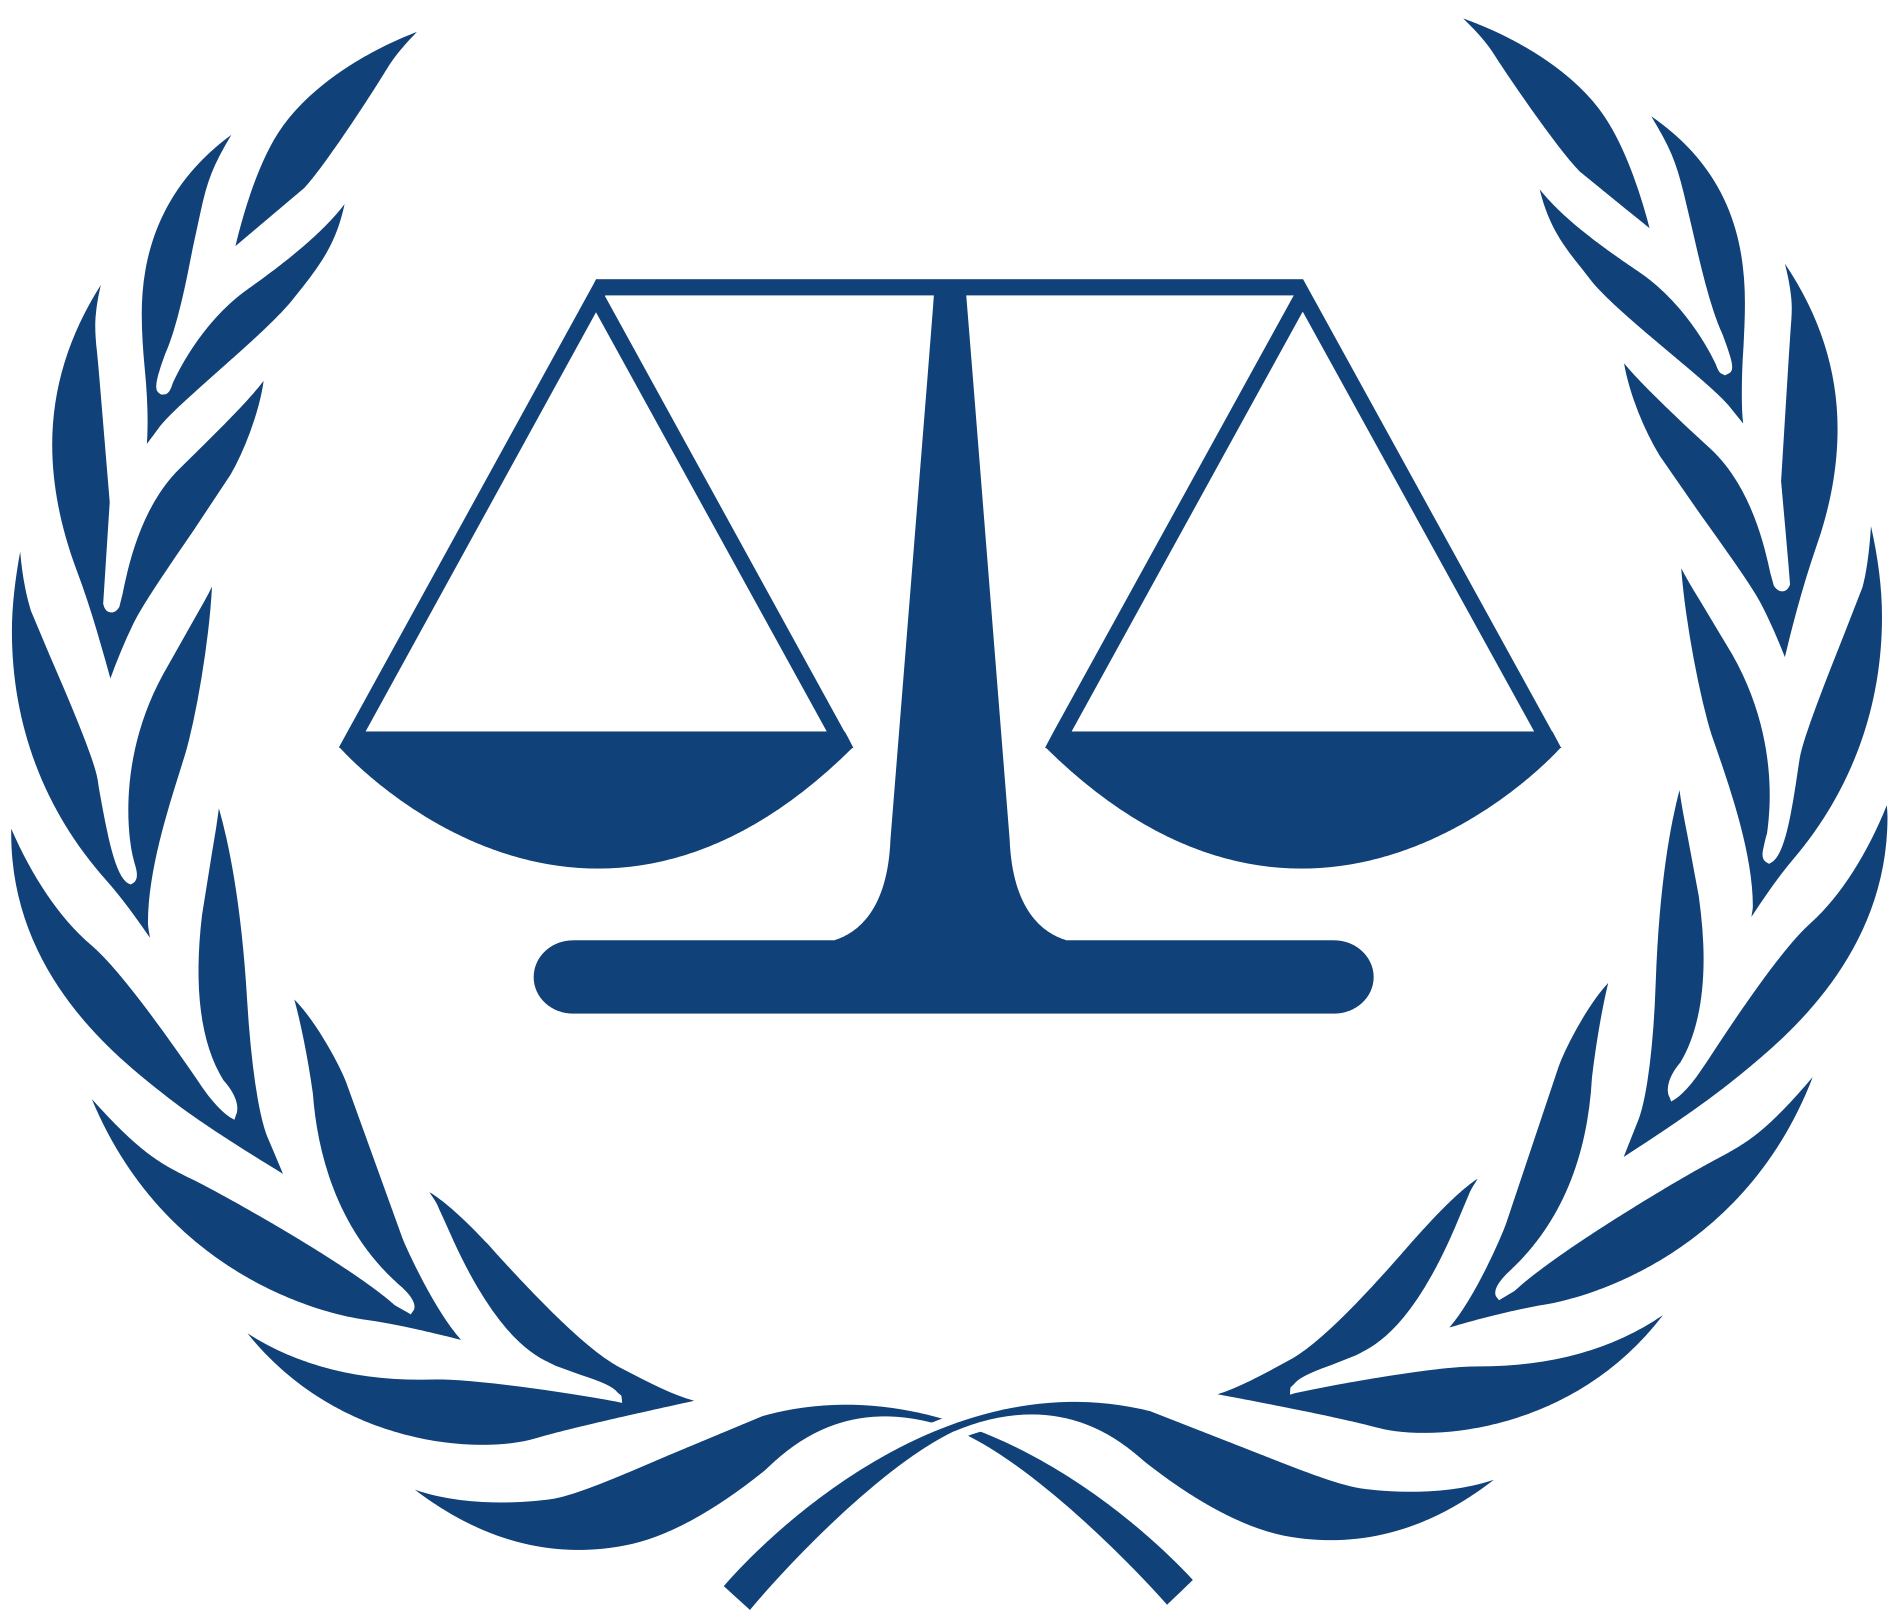 Pictures Of Criminals - International Criminal Court (2000x1727)